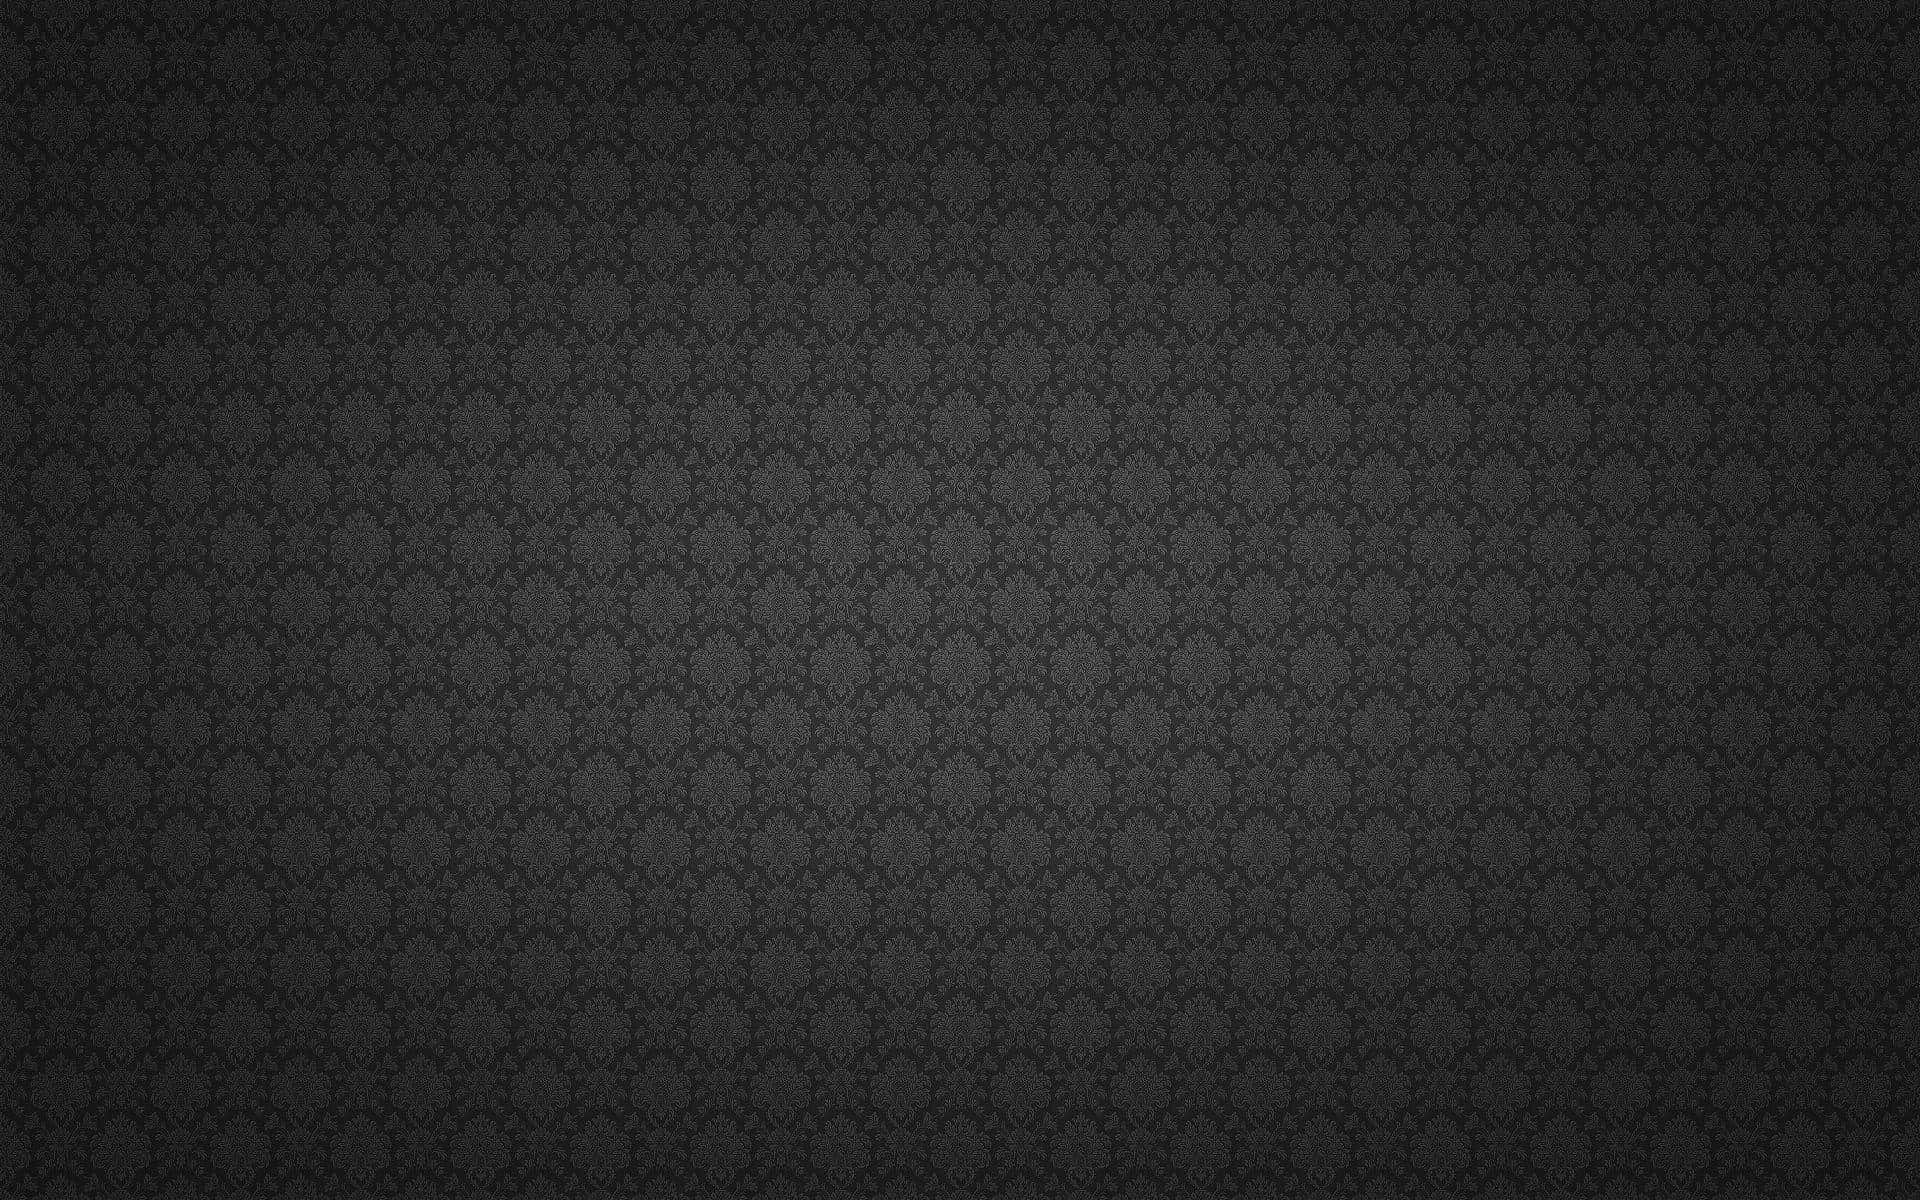 Plain Black Desktop With Elegant Patterns Wallpaper